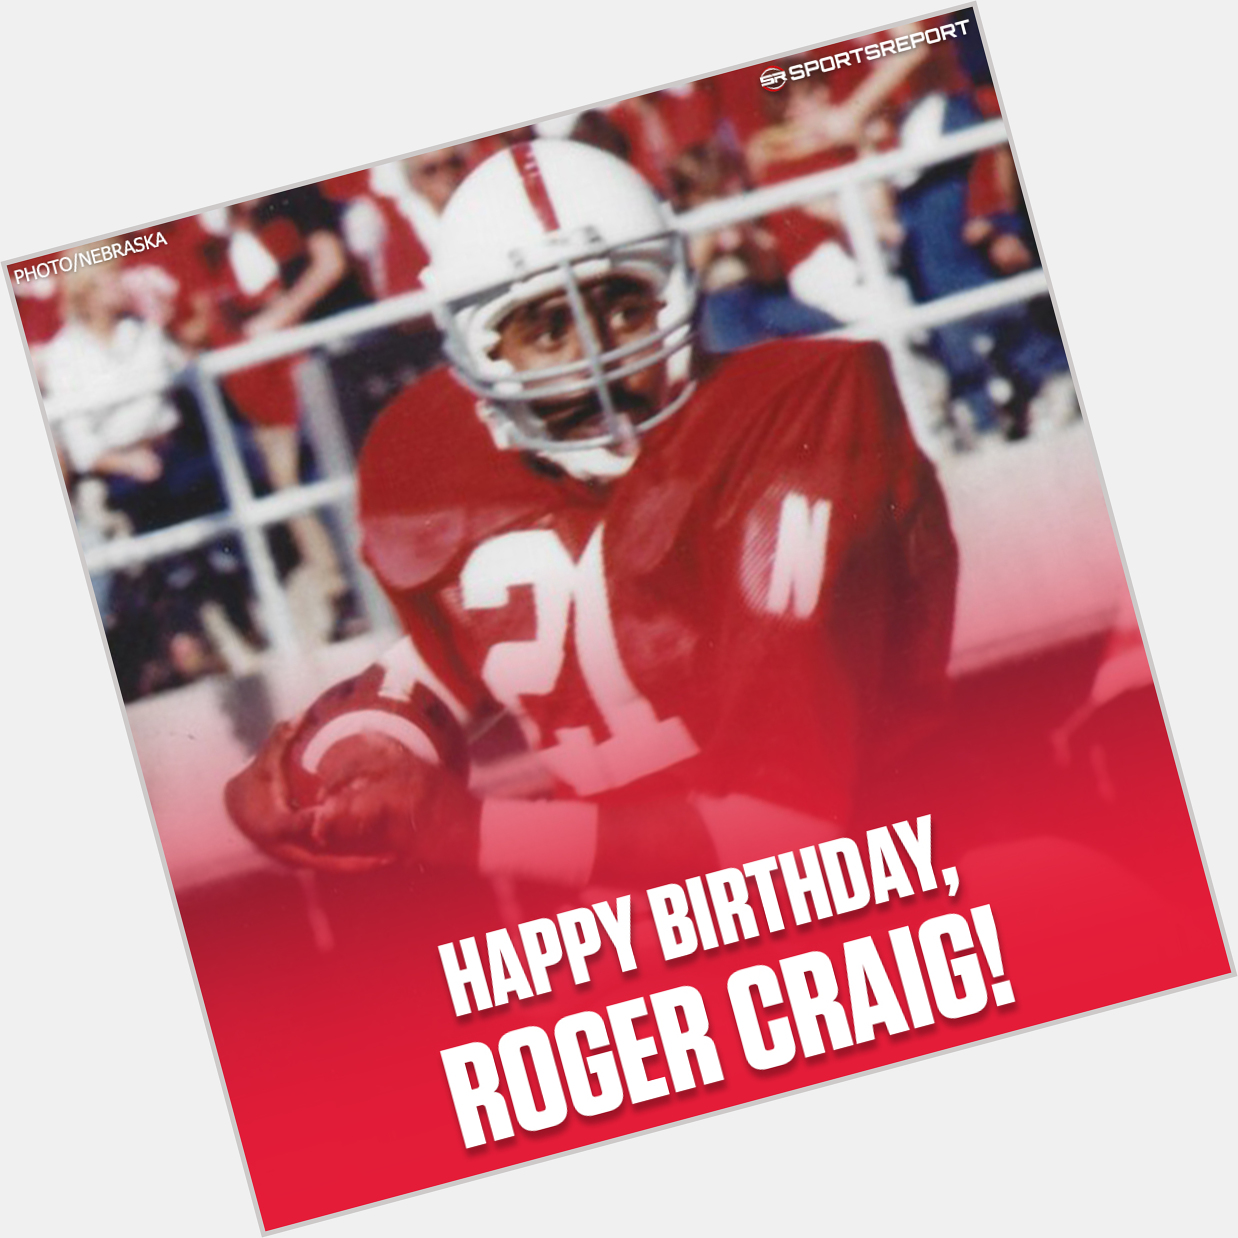 Happy Birthday to Legend, Roger Craig! 